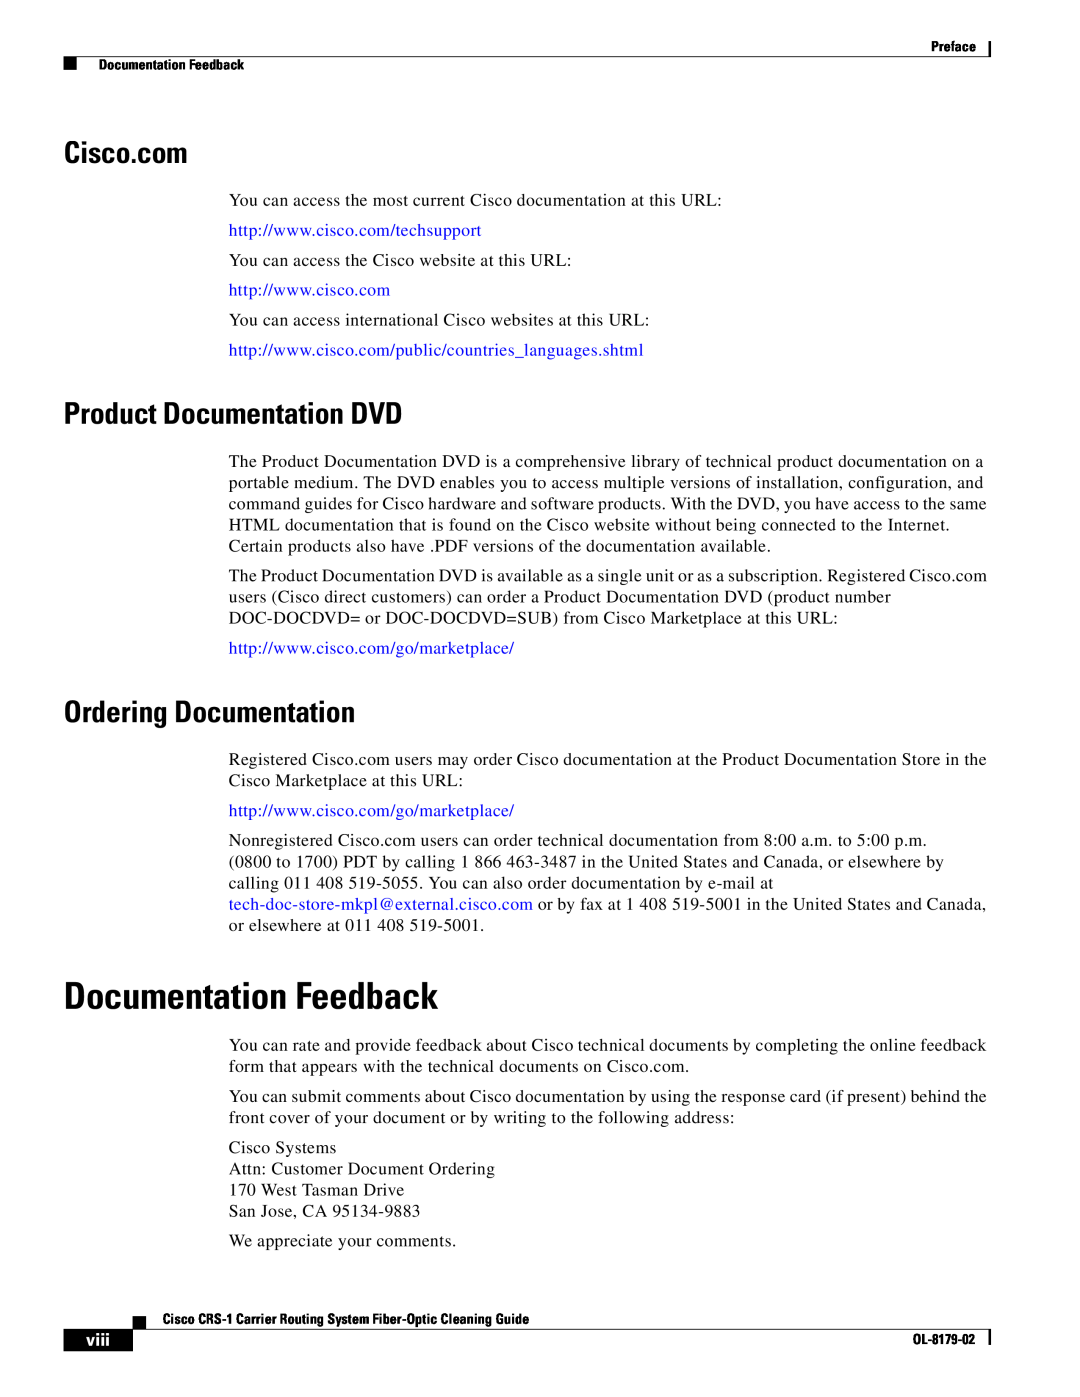 Cisco Systems CRS-1 manual Documentation Feedback, Cisco.com, Product Documentation DVD, Ordering Documentation, viii 